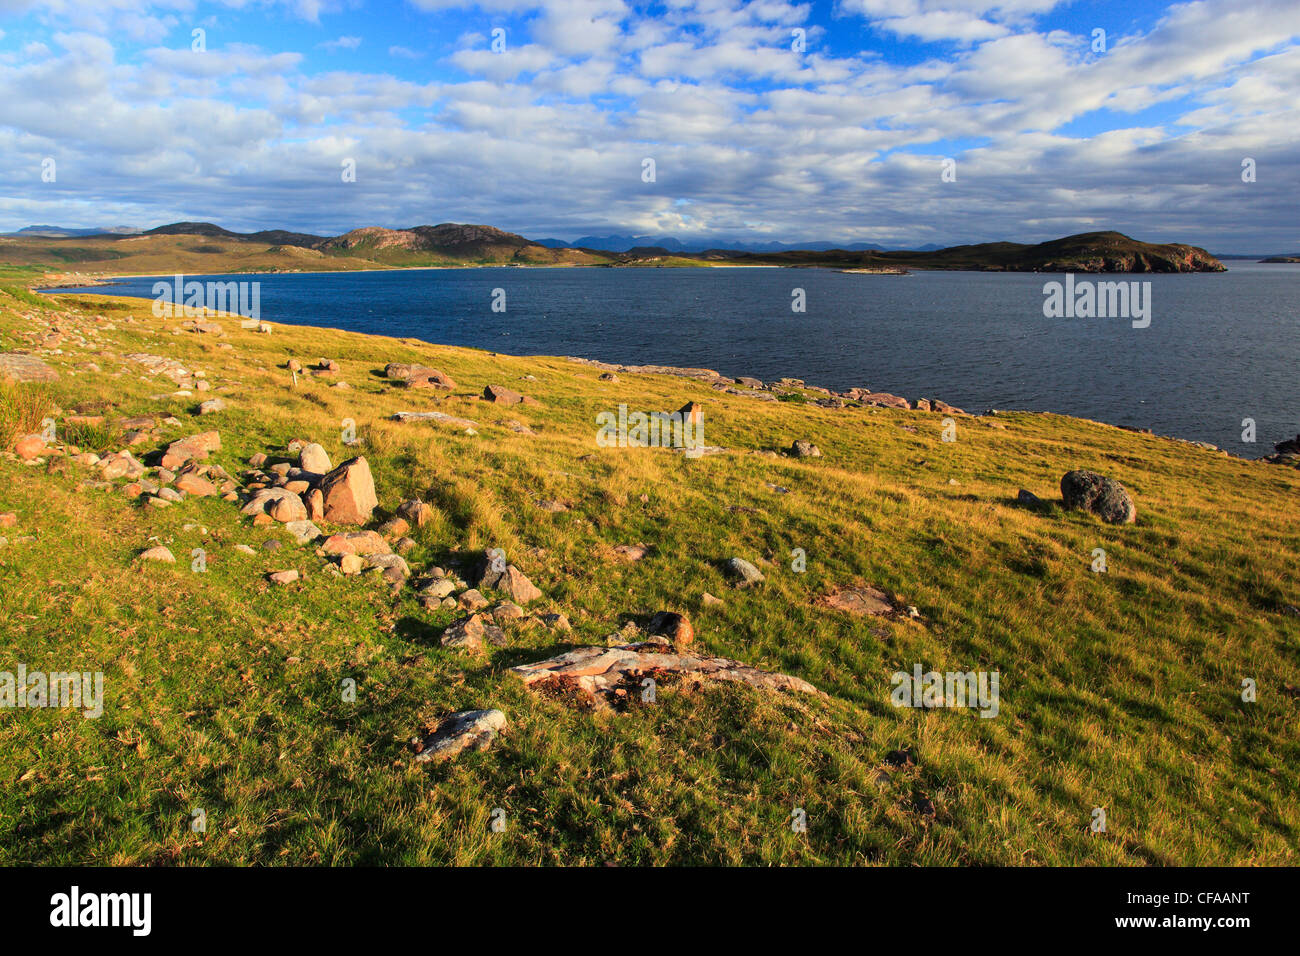 Achiltibuie, bay, Coigach, Coigach peninsula, Great Britain, Highland, highlands, sky, highland, cliffs, coast, coastal scenery, Stock Photo